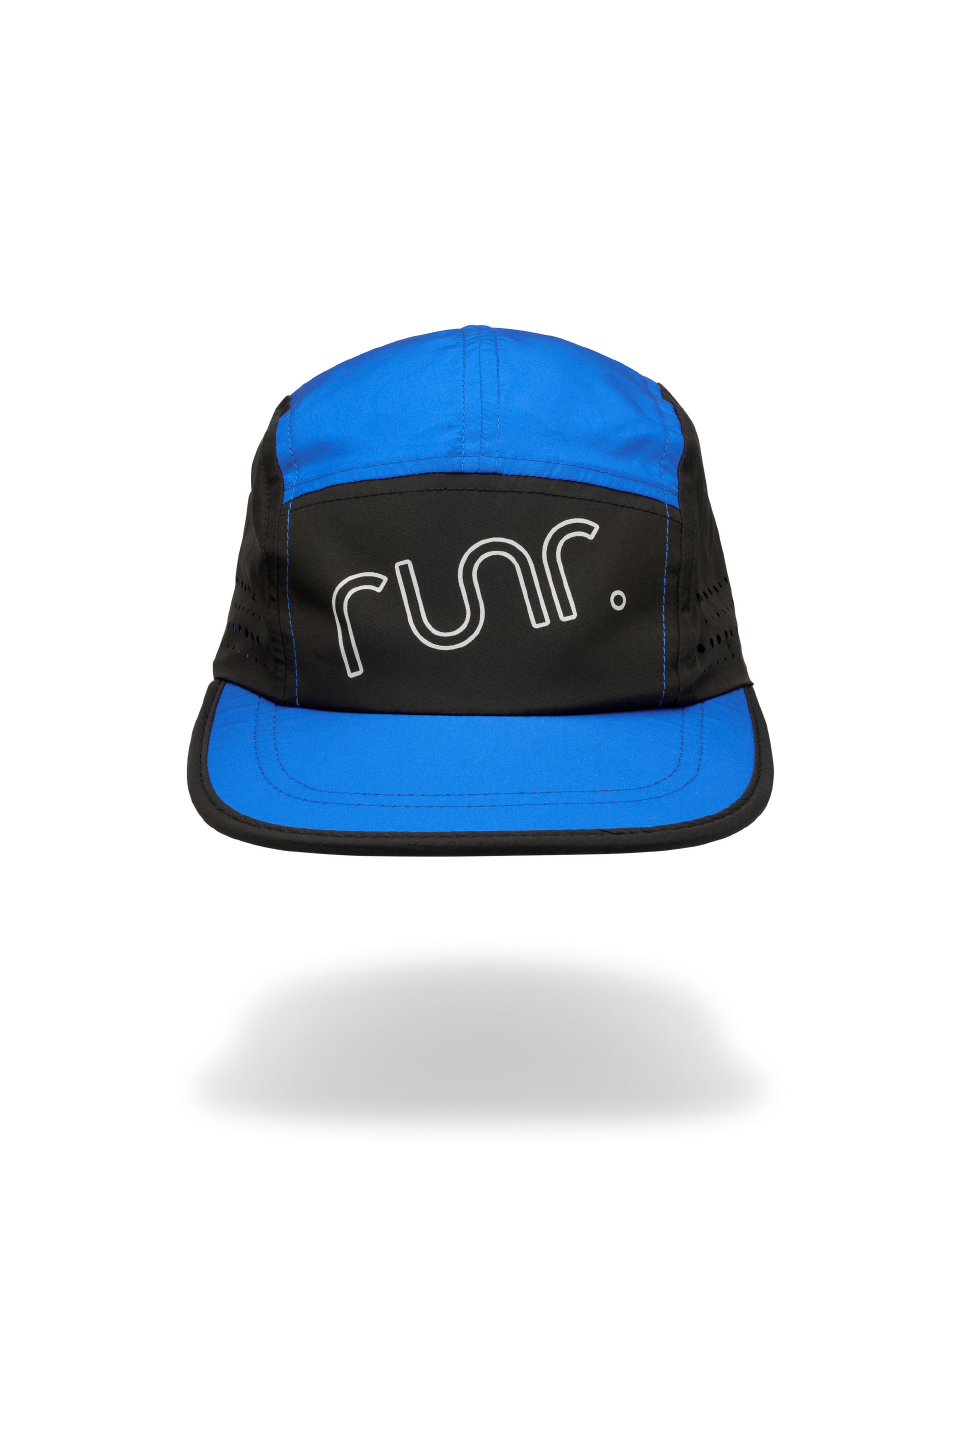 Runr Helsinki Technical Running Hat